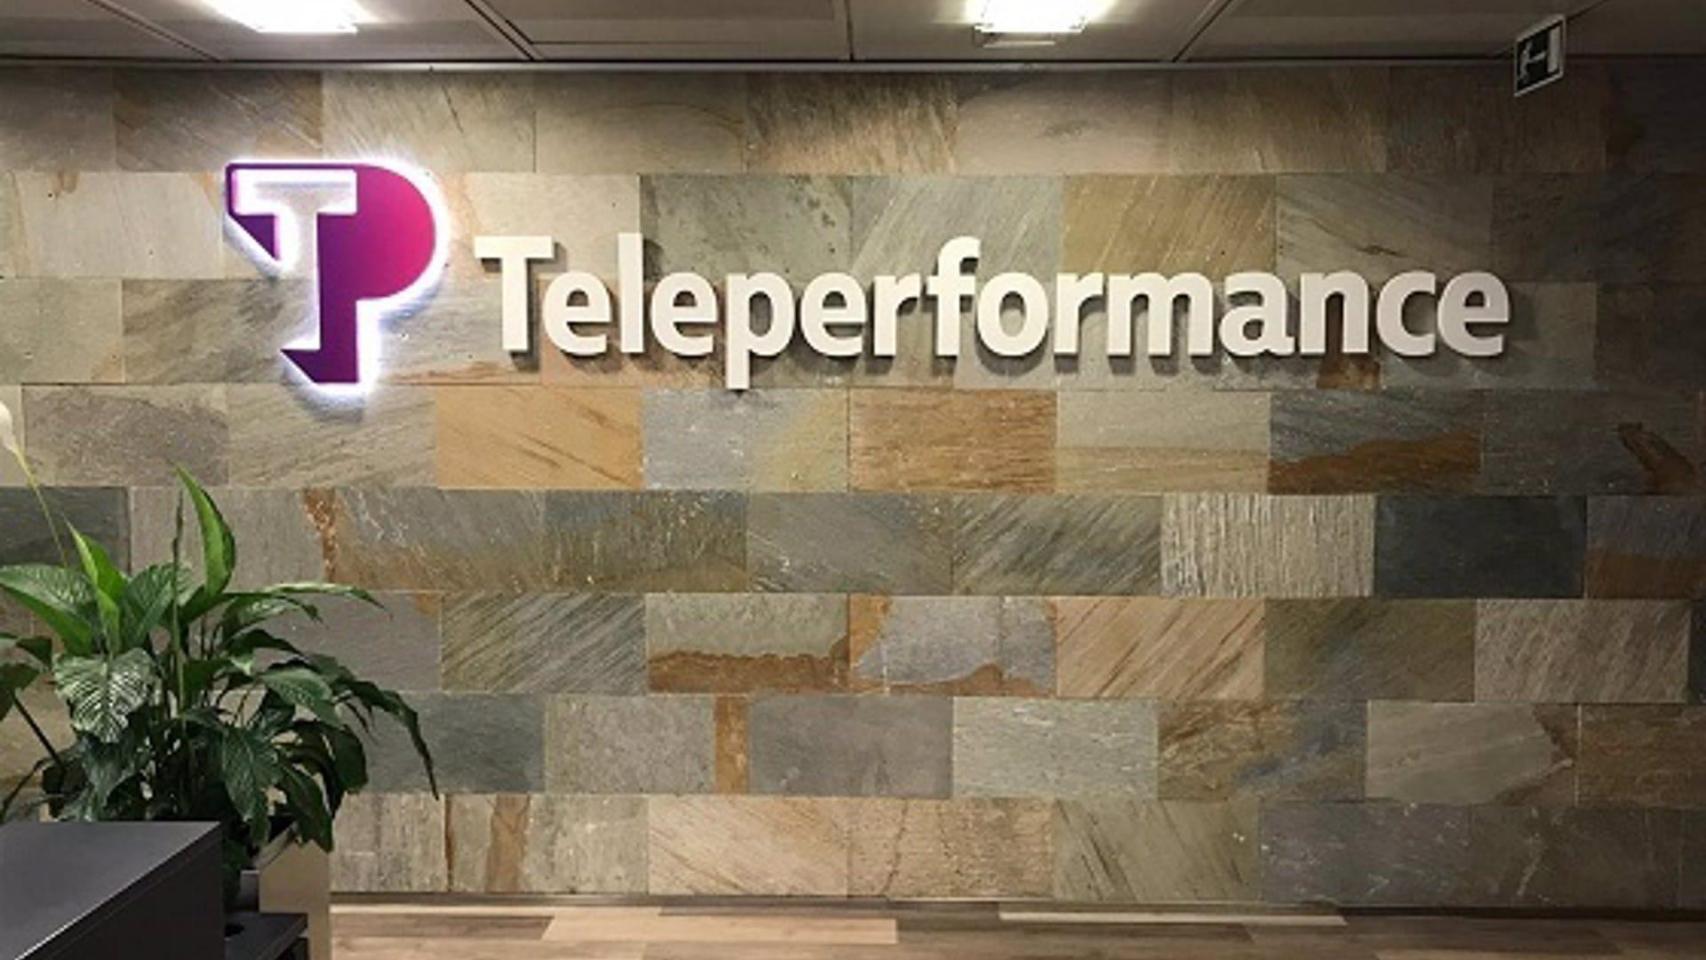 Oficinas de Teleperformance en Madrid.